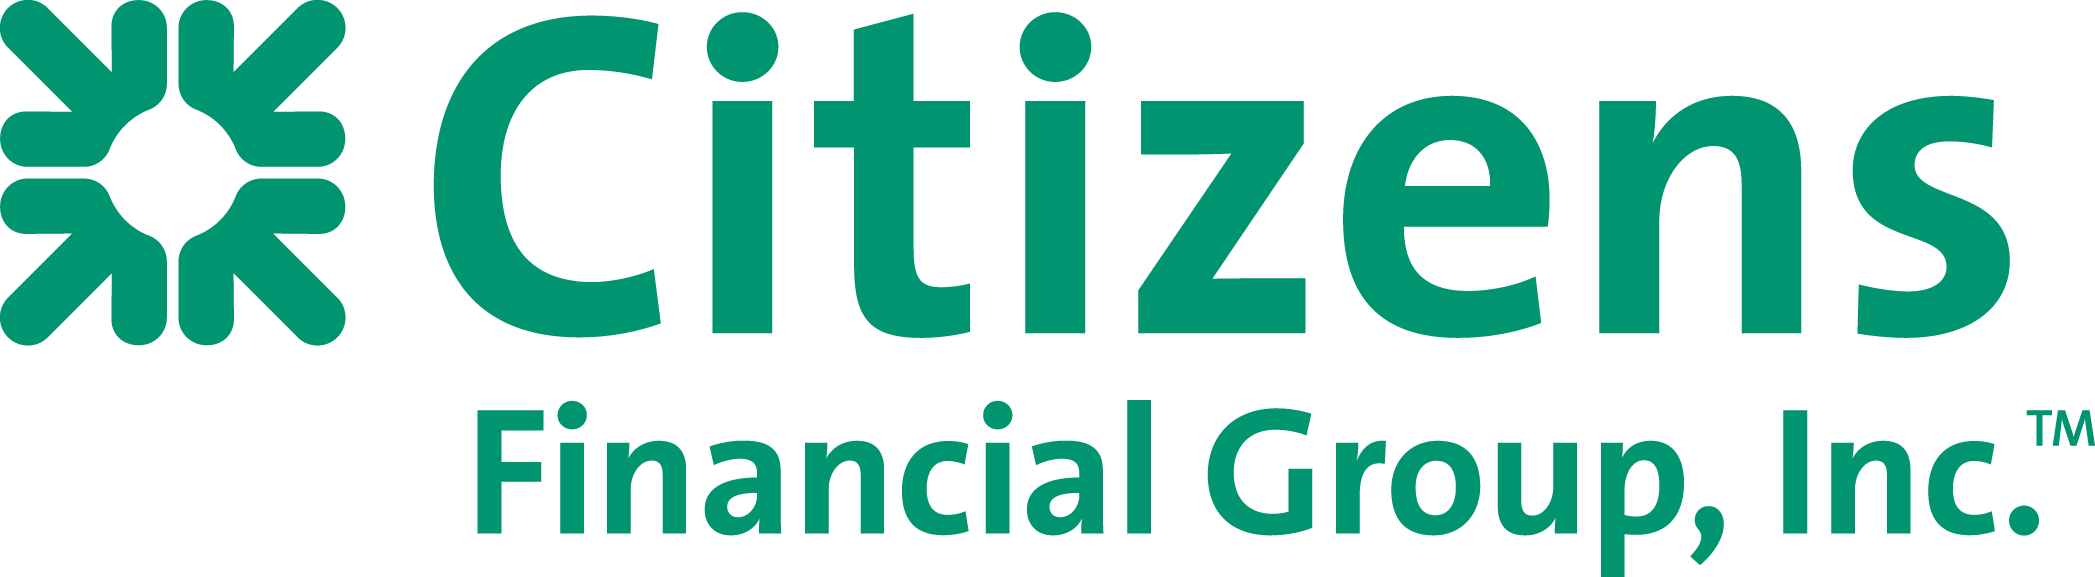 Bankers Financial, Inc. Logo photo - 1